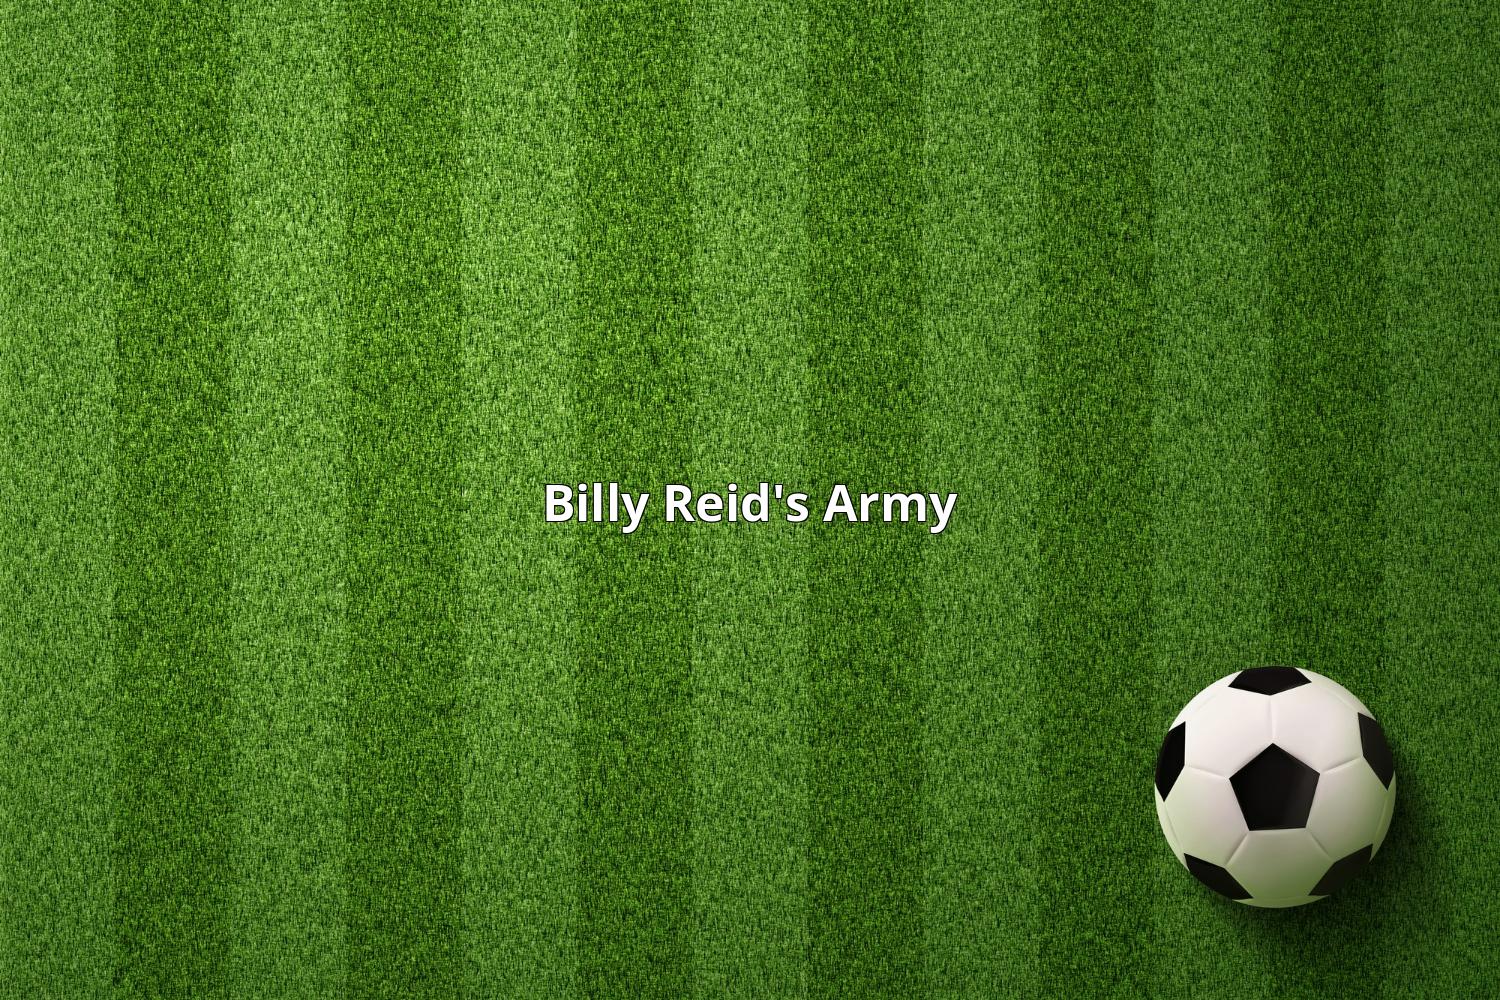 Billy Reid's Army Football Chant - Footie Chants